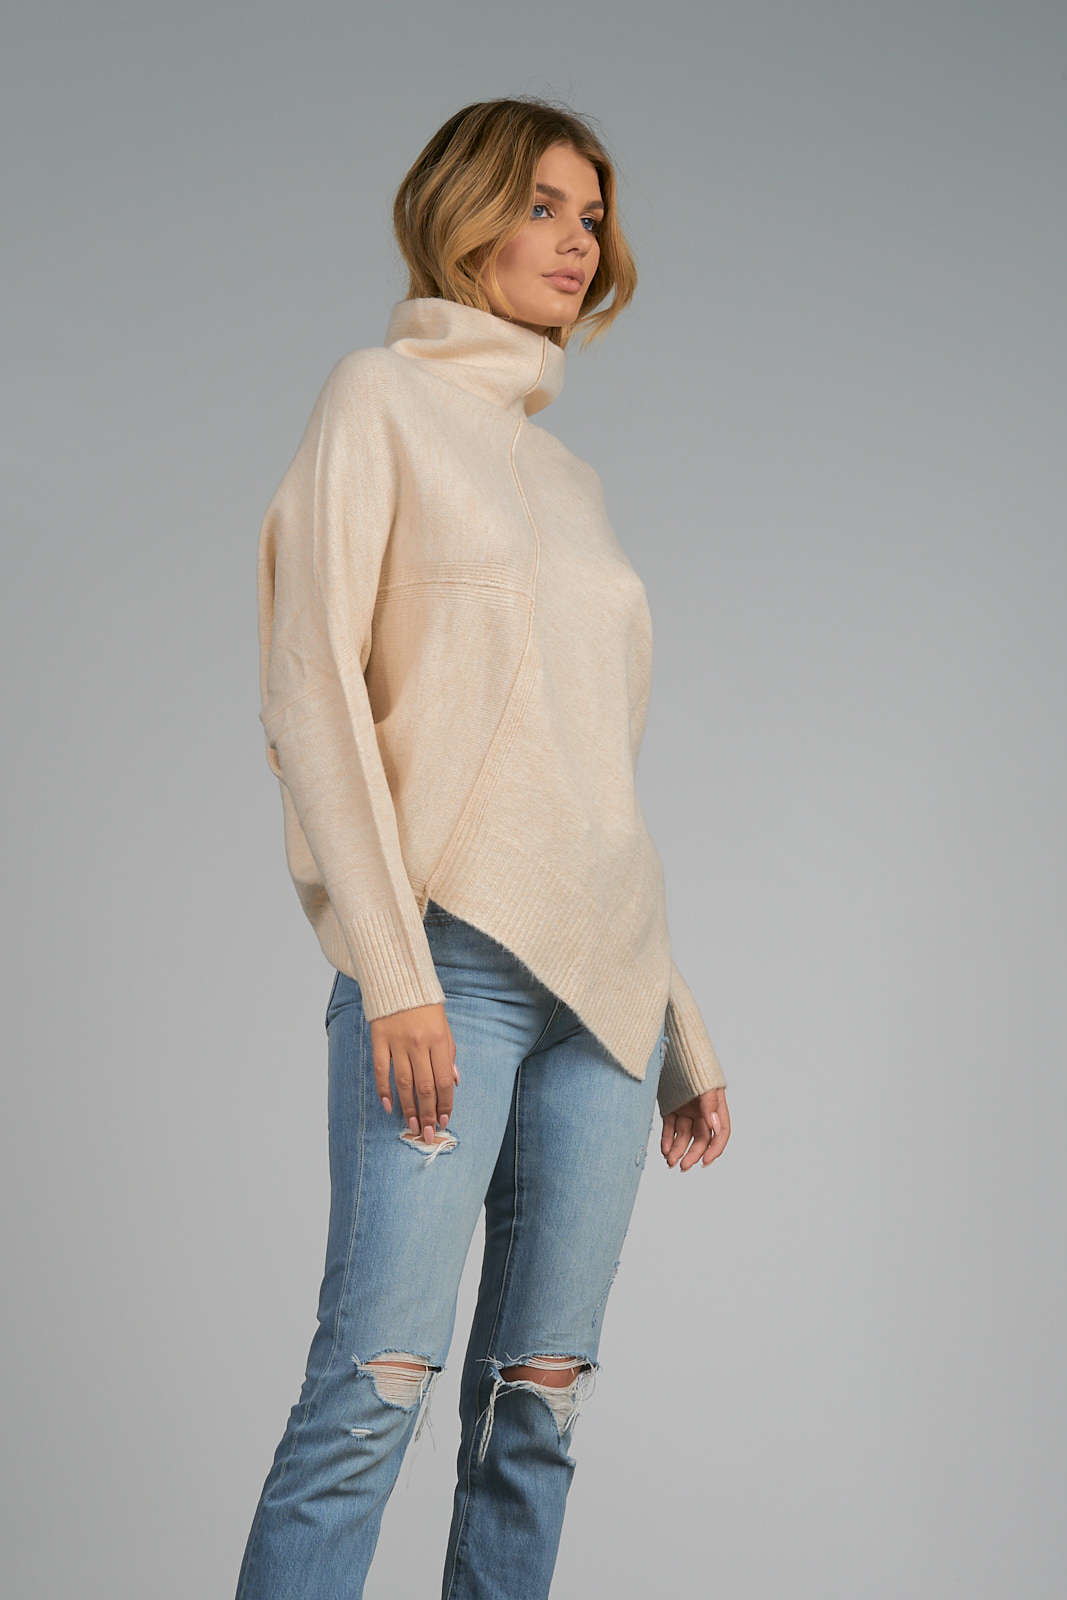 Asymmetrical Cream Turtleneck Sweater - Frontier Justice